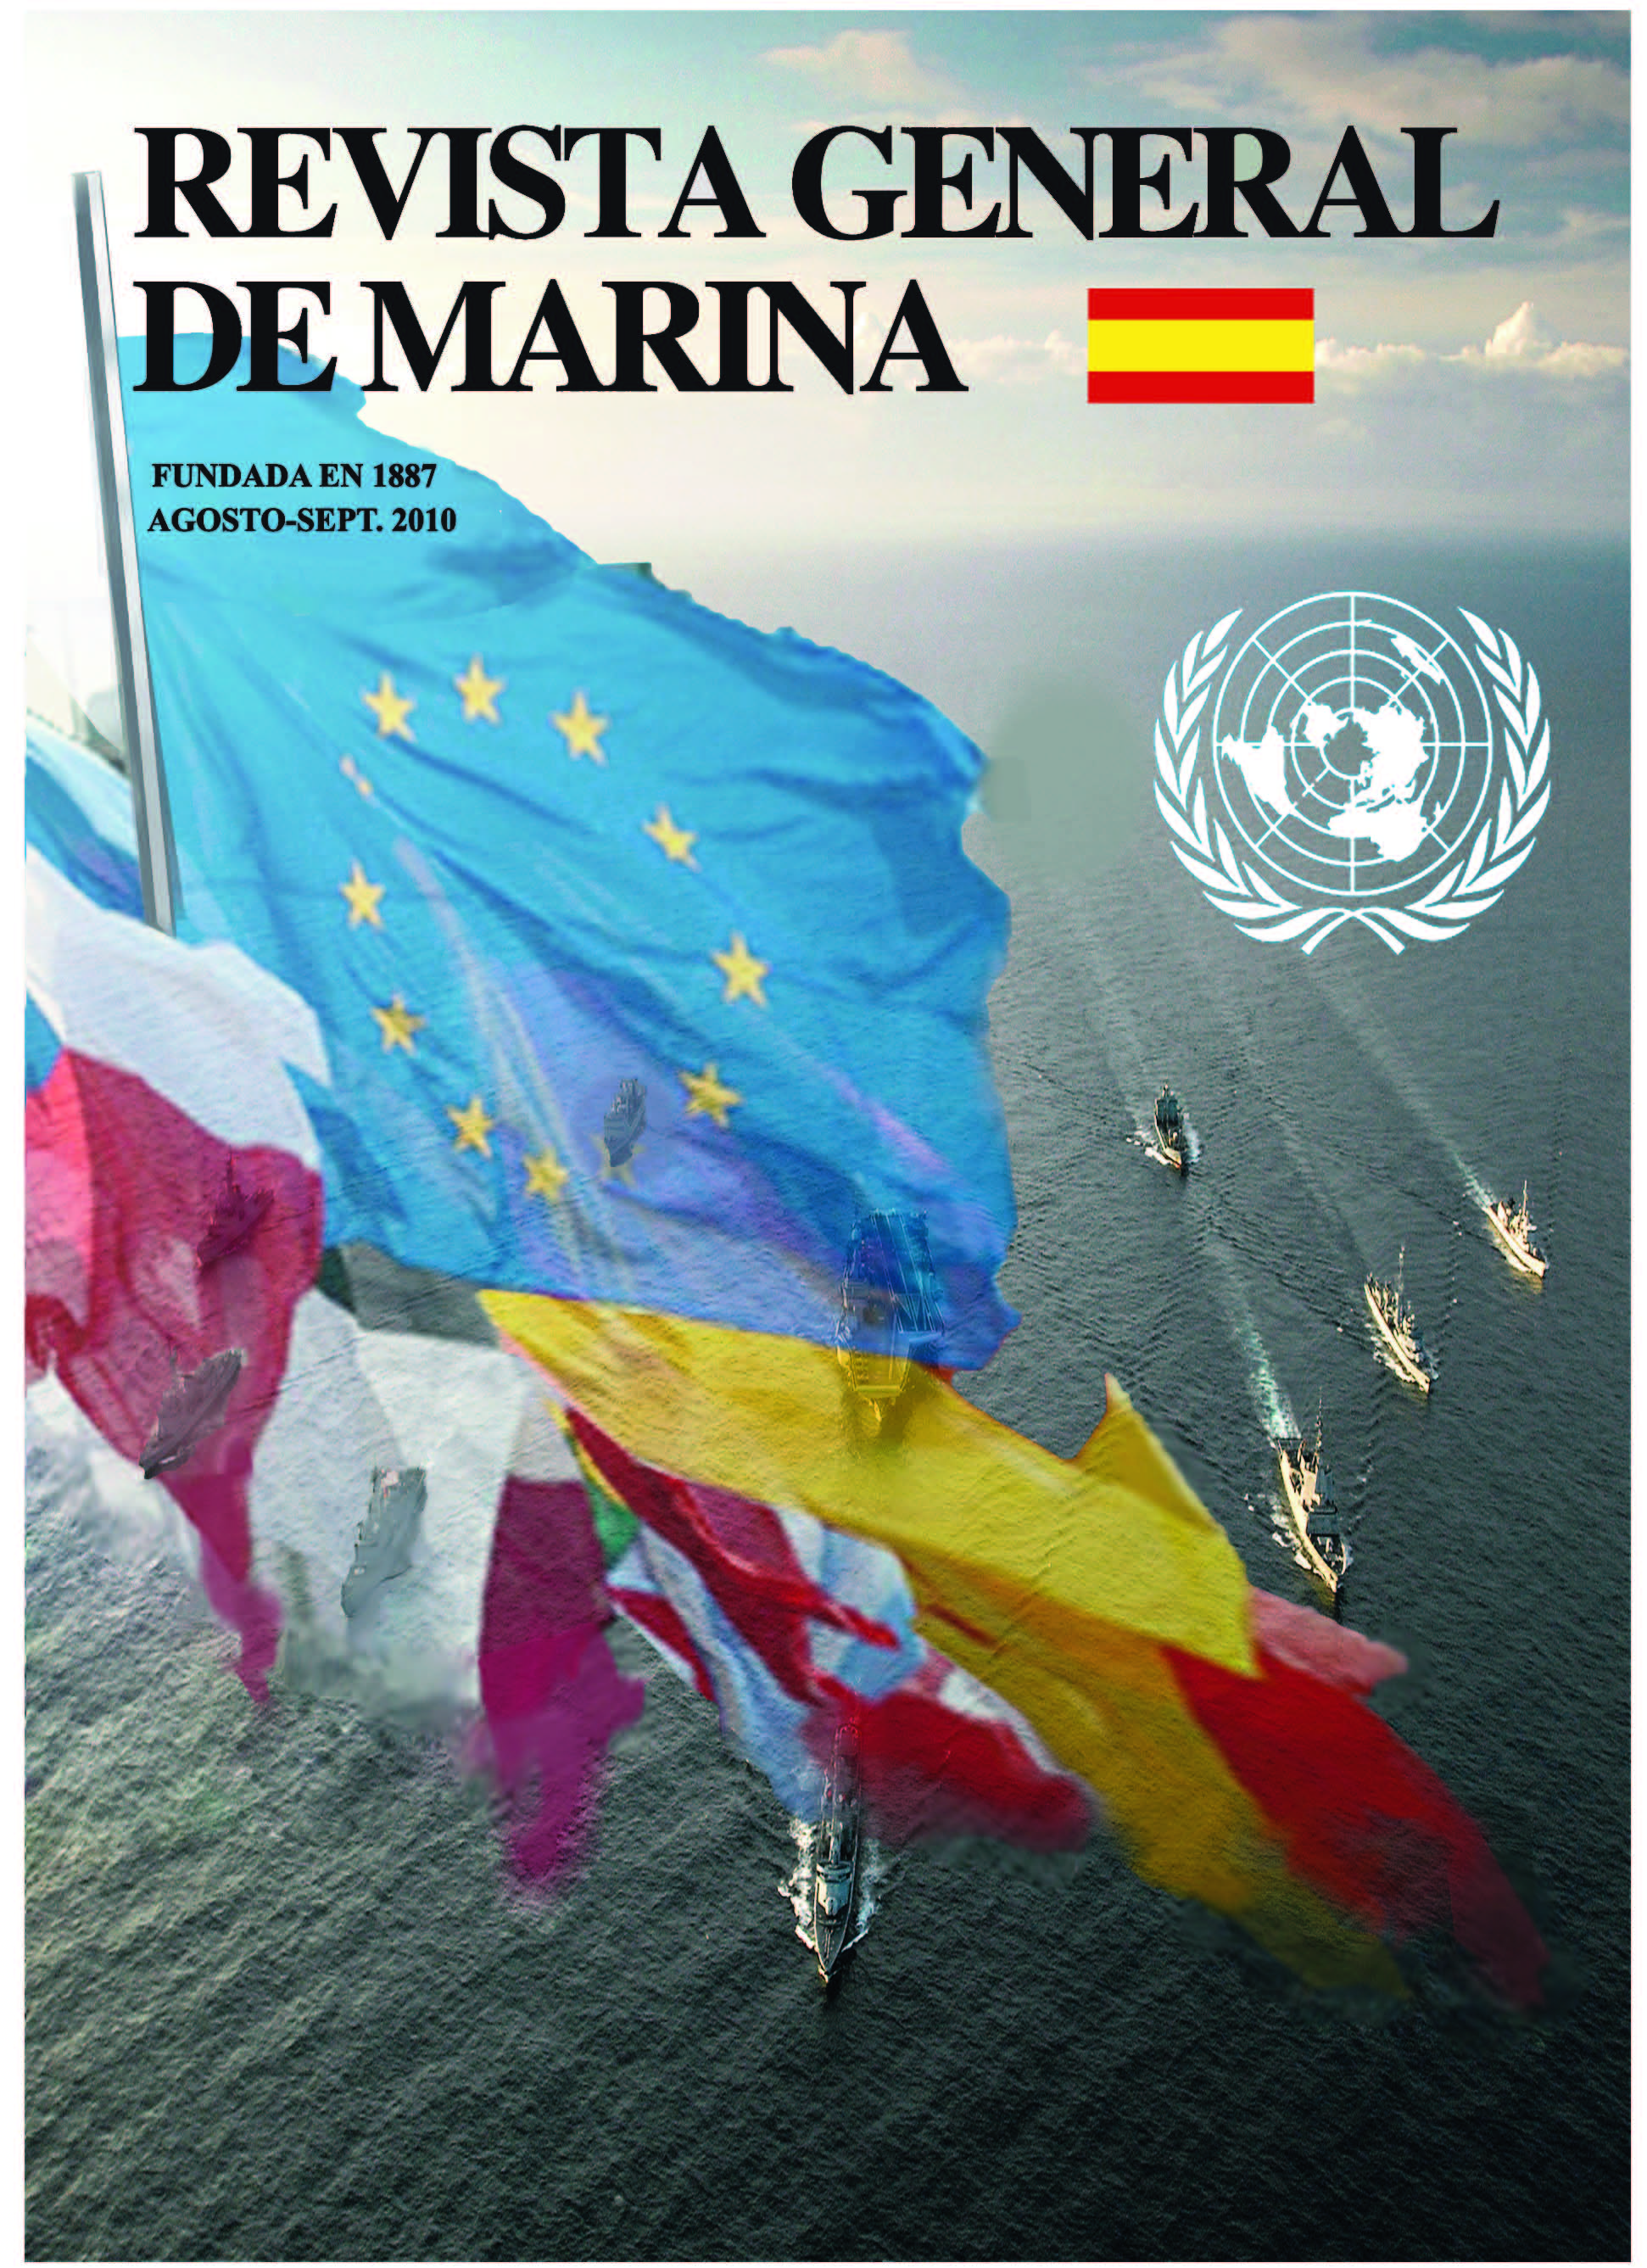 Revista General de Marina / agosto - septiembre 2010